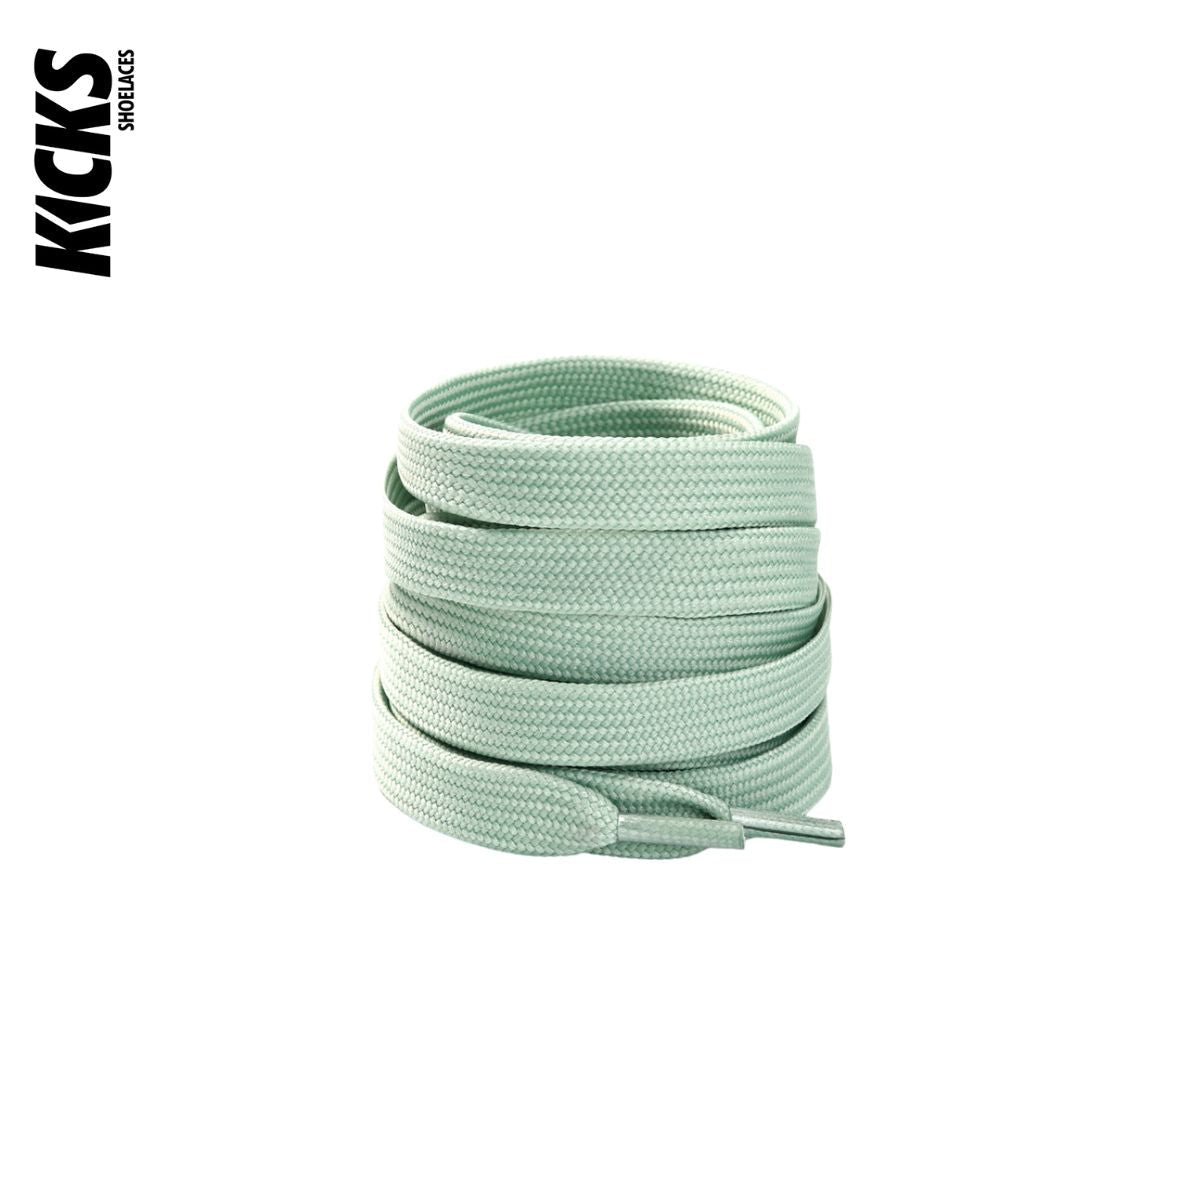 Pastel Green Nike Dunks Shoelace Replacements - Kicks Shoelaces